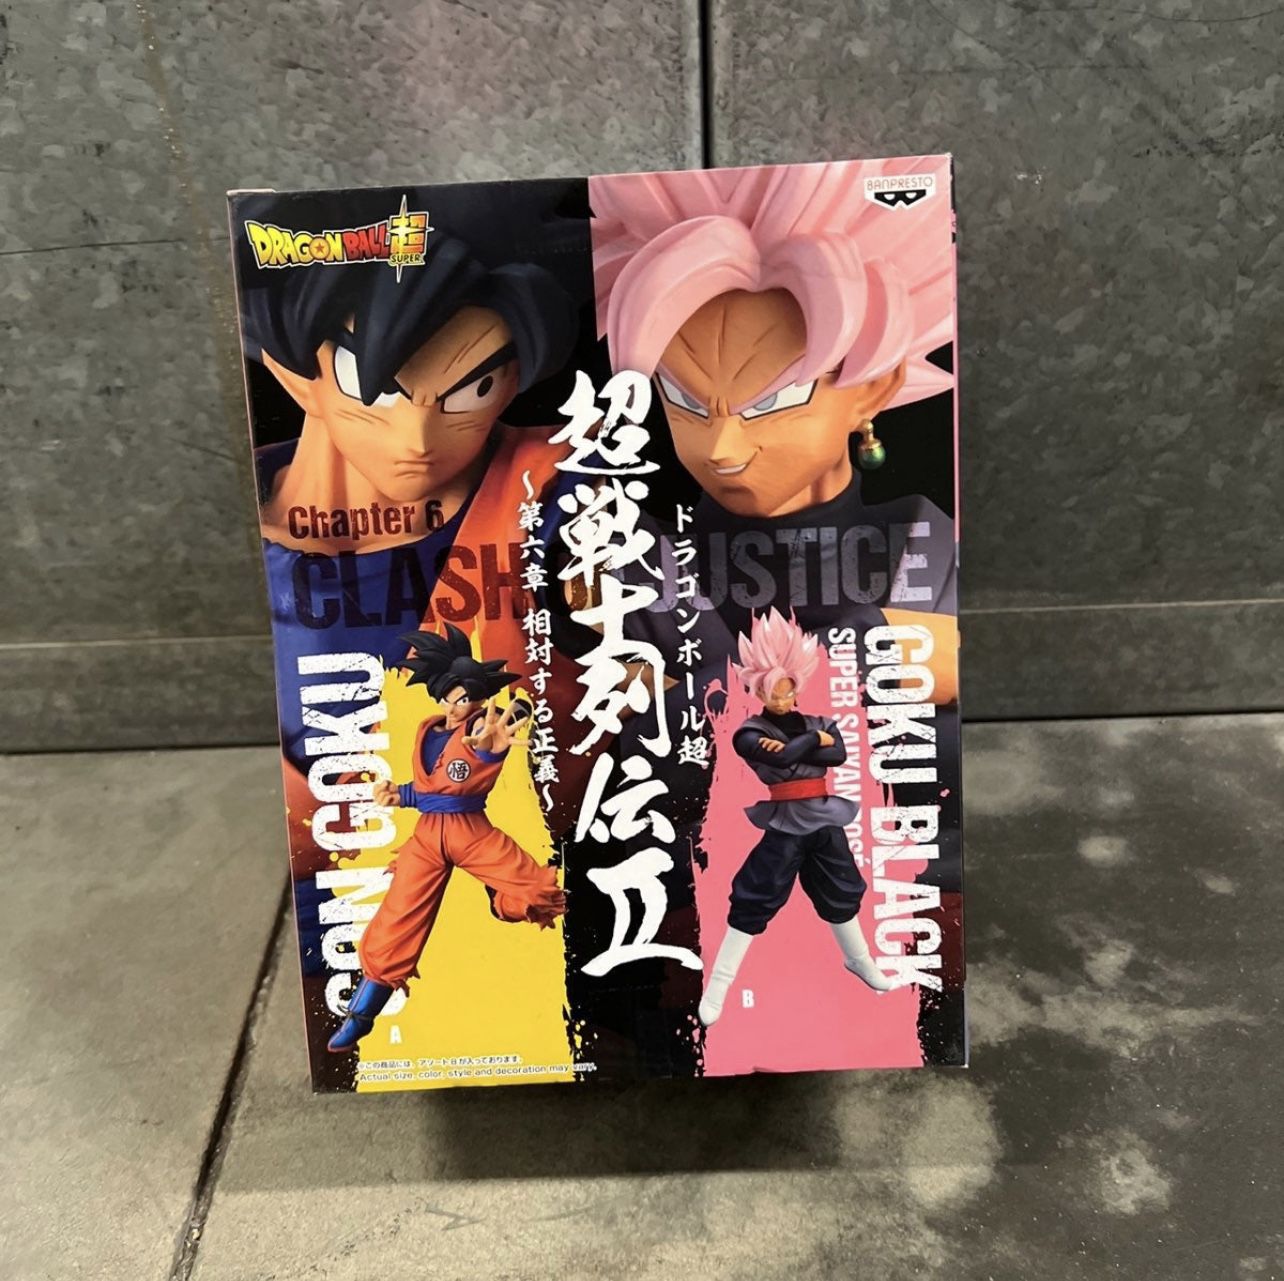 Dragonball Super Chapter 6 Clash of Justice Son Goku figure 'A' Banpresto TOEI N